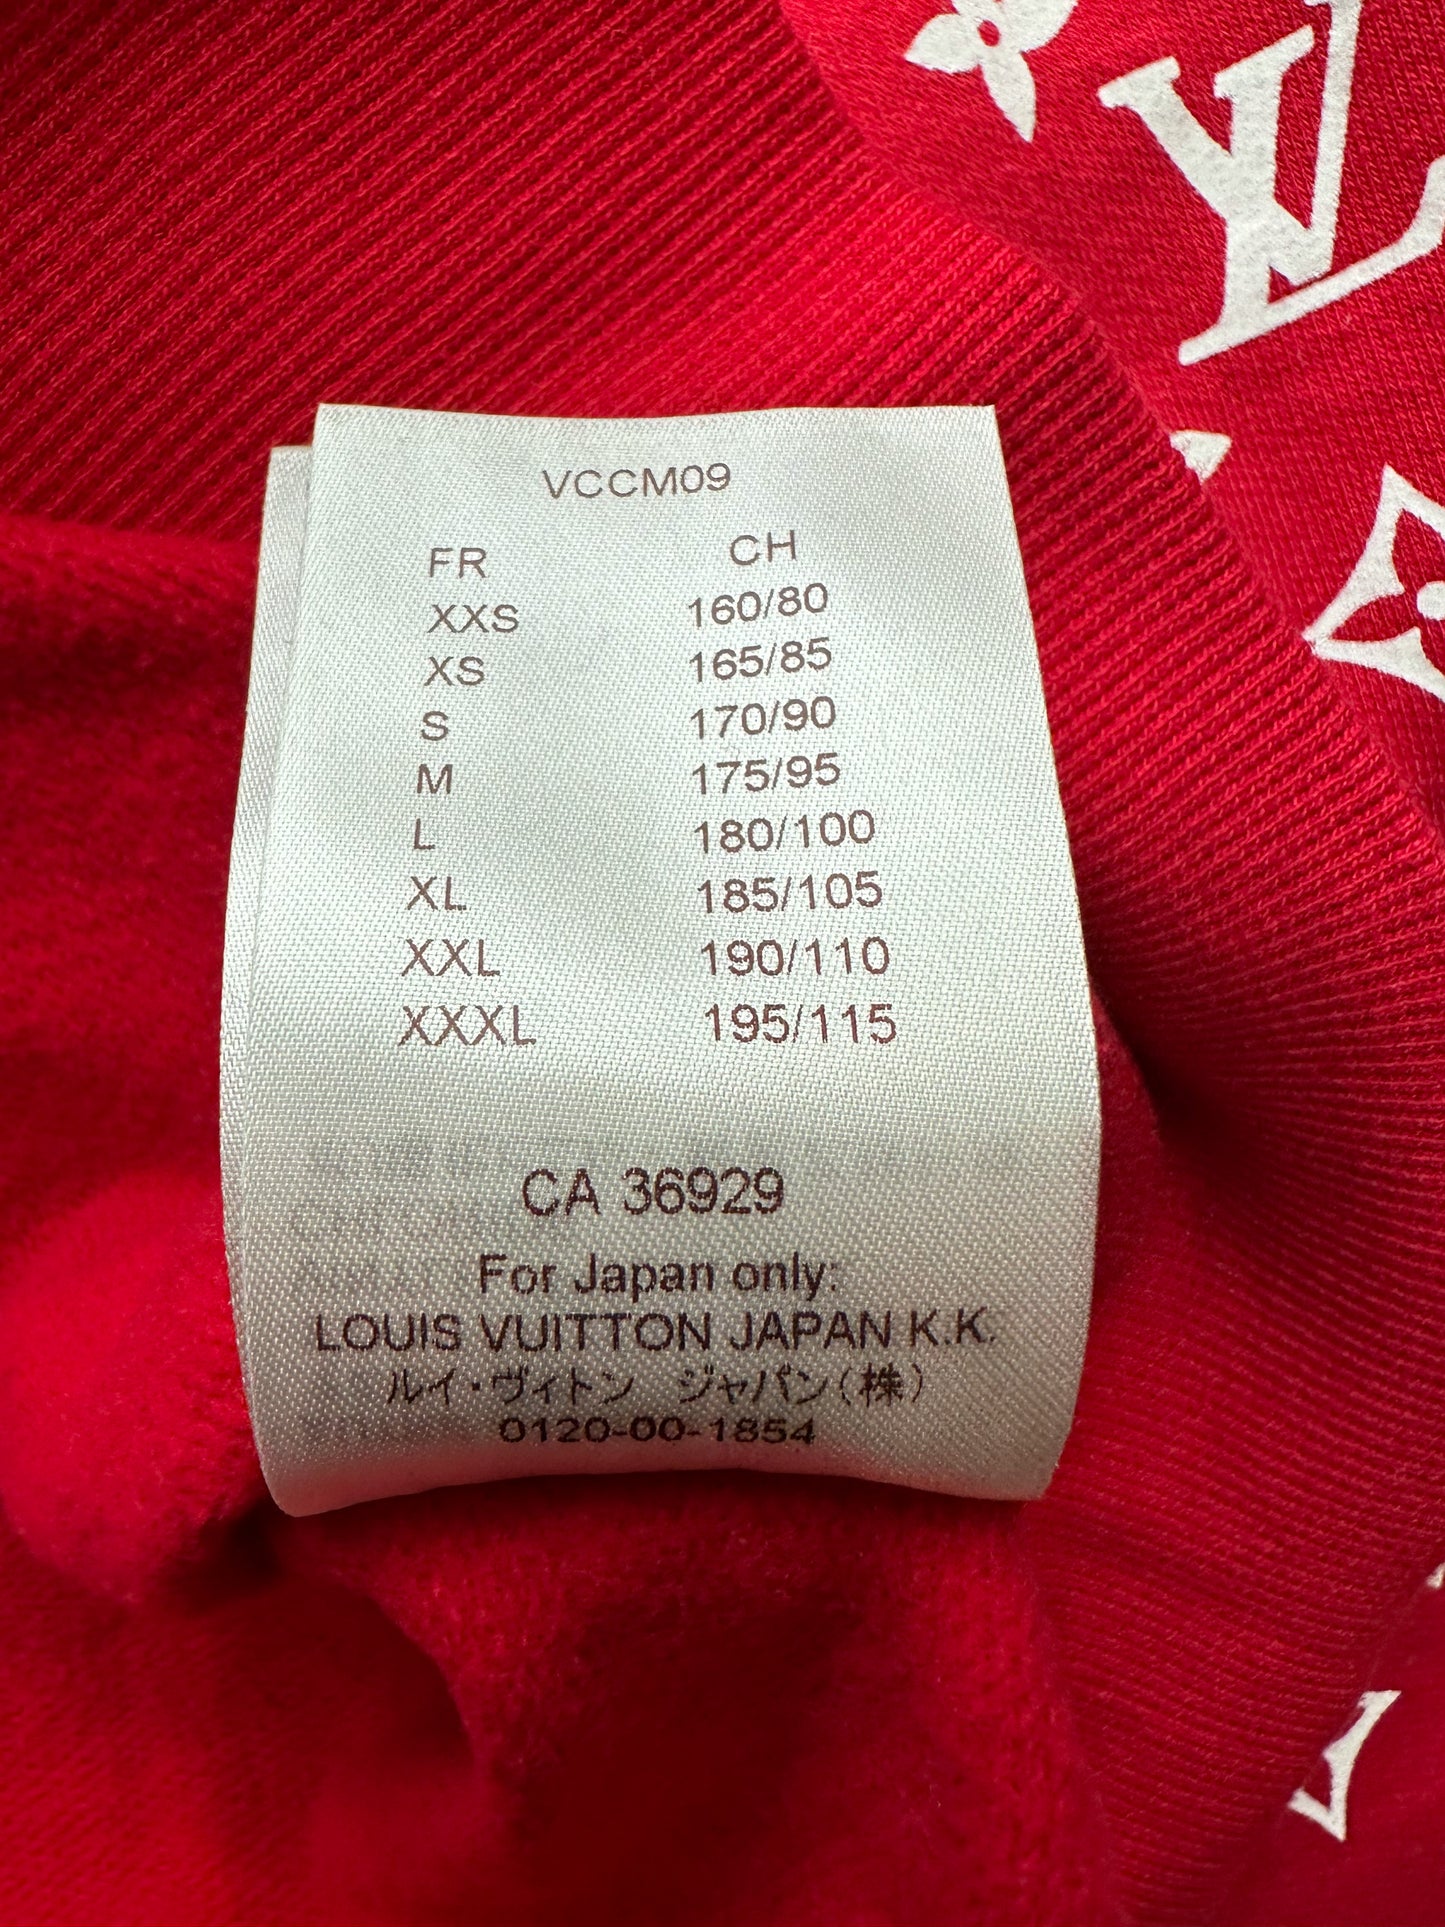 Supreme x Louis Vuitton Box Logo Hooded Sweatshirt Red